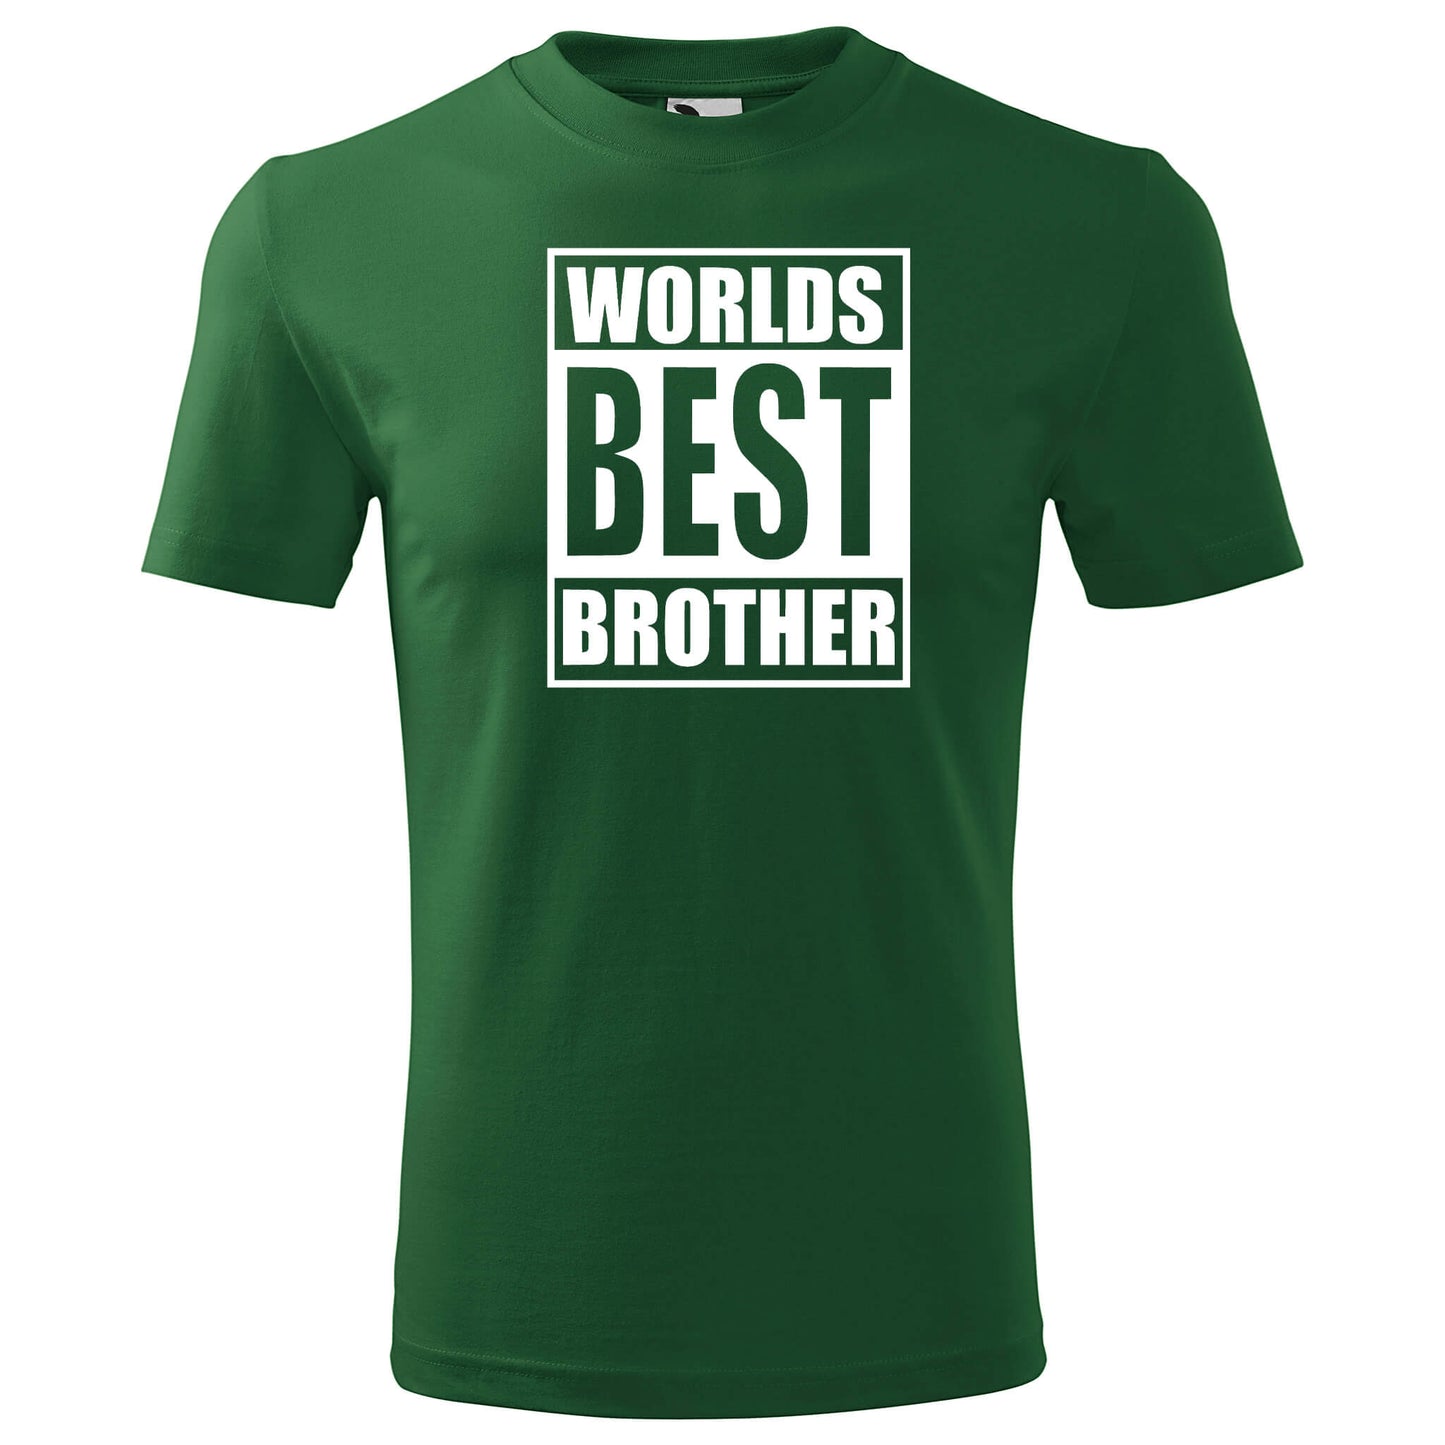 T-shirt - Worlds best brother - Customizable - rvdesignprint